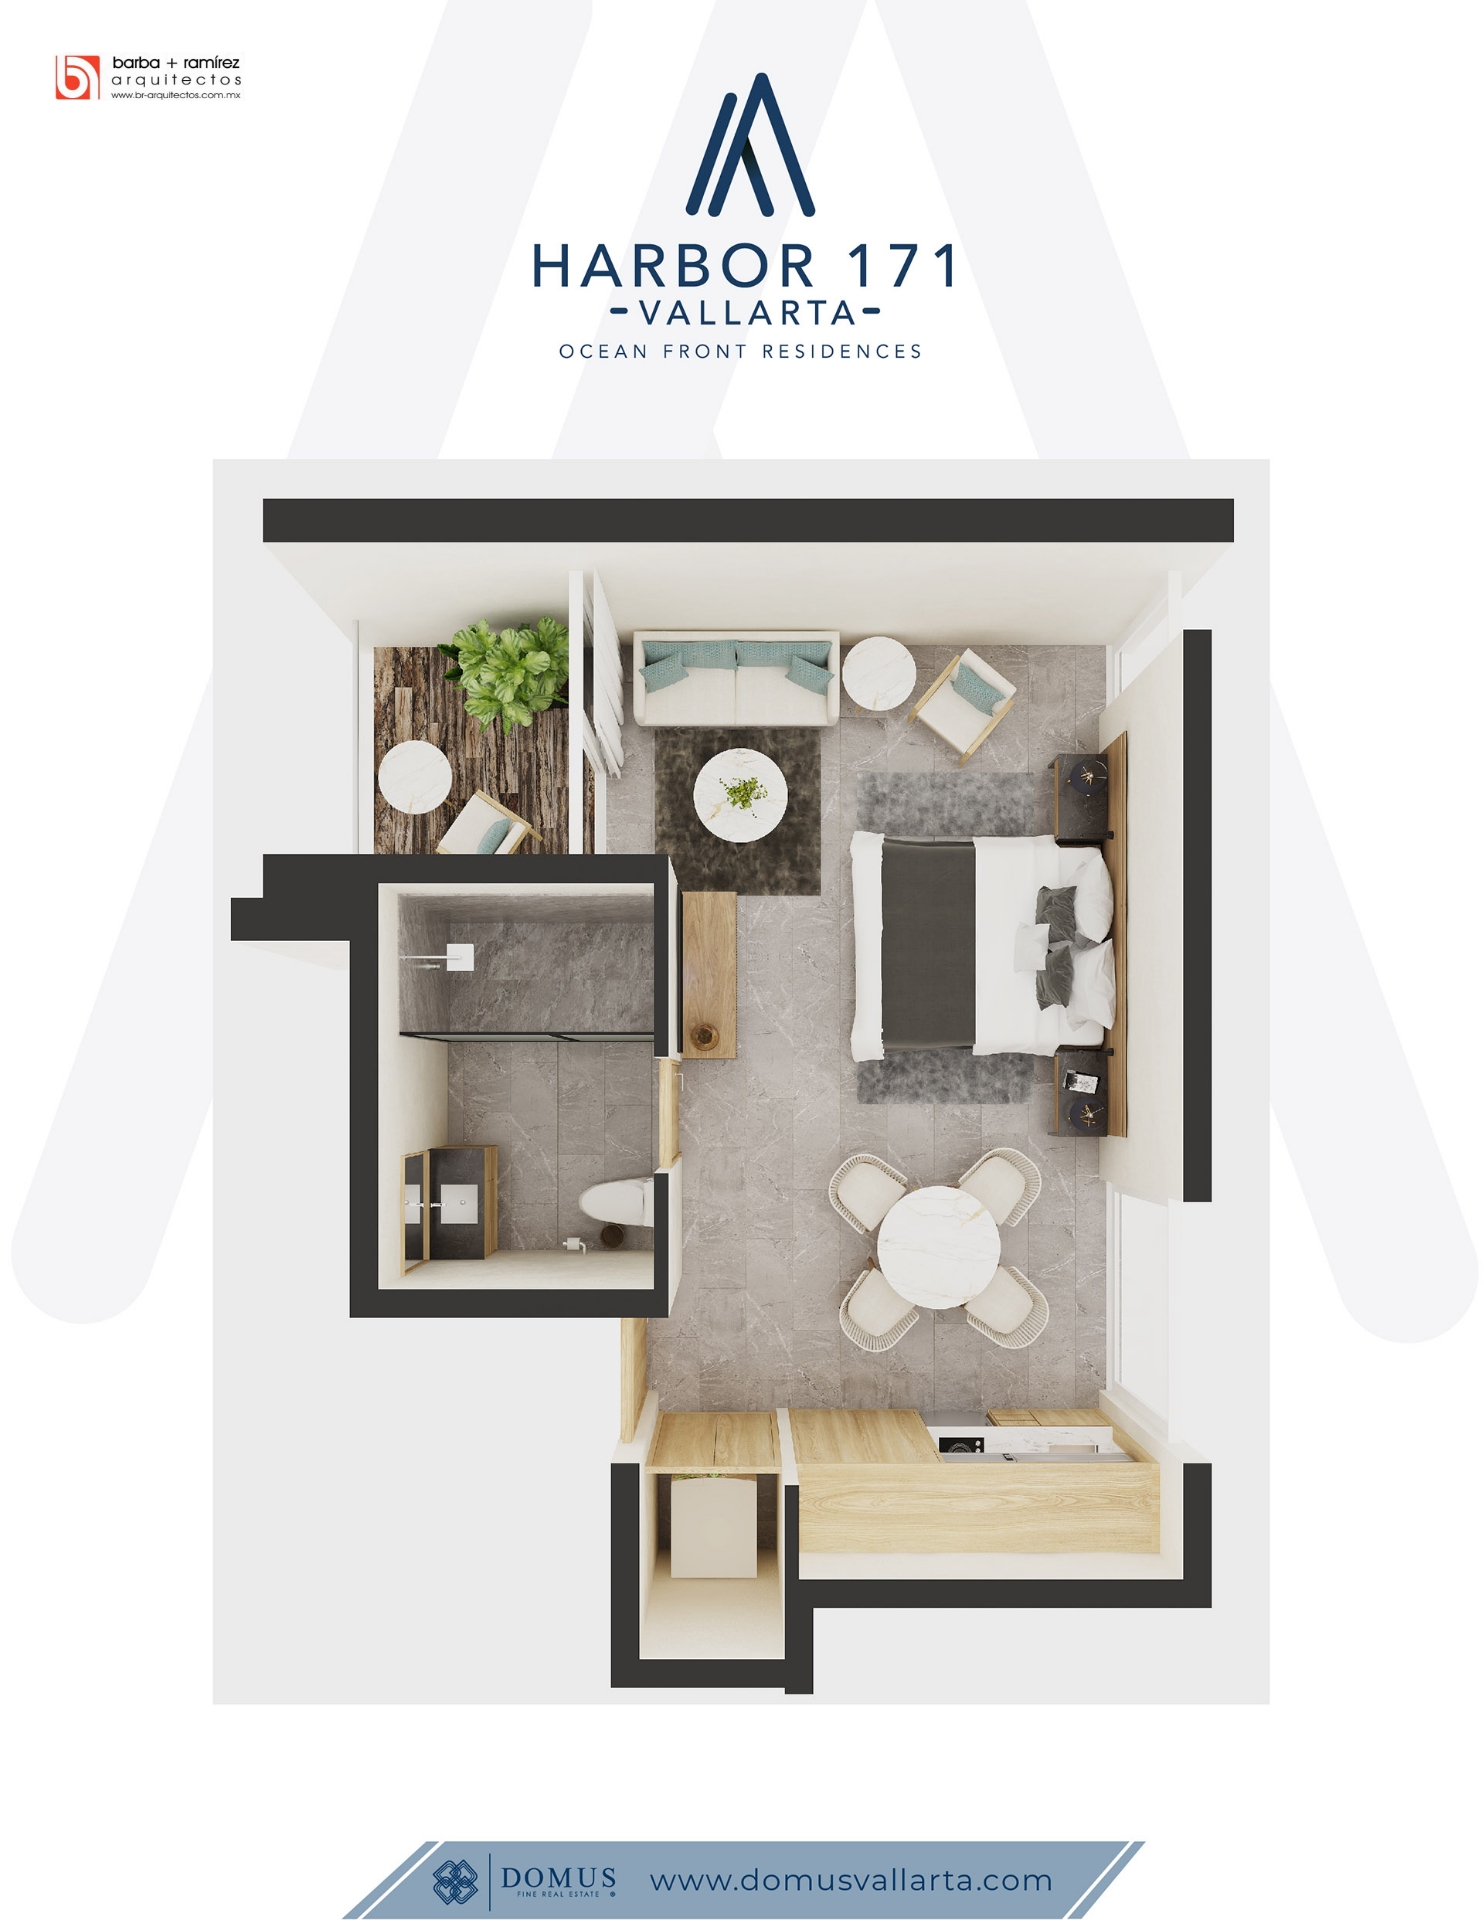 Unit 1310 Blueprint - Harbor 171